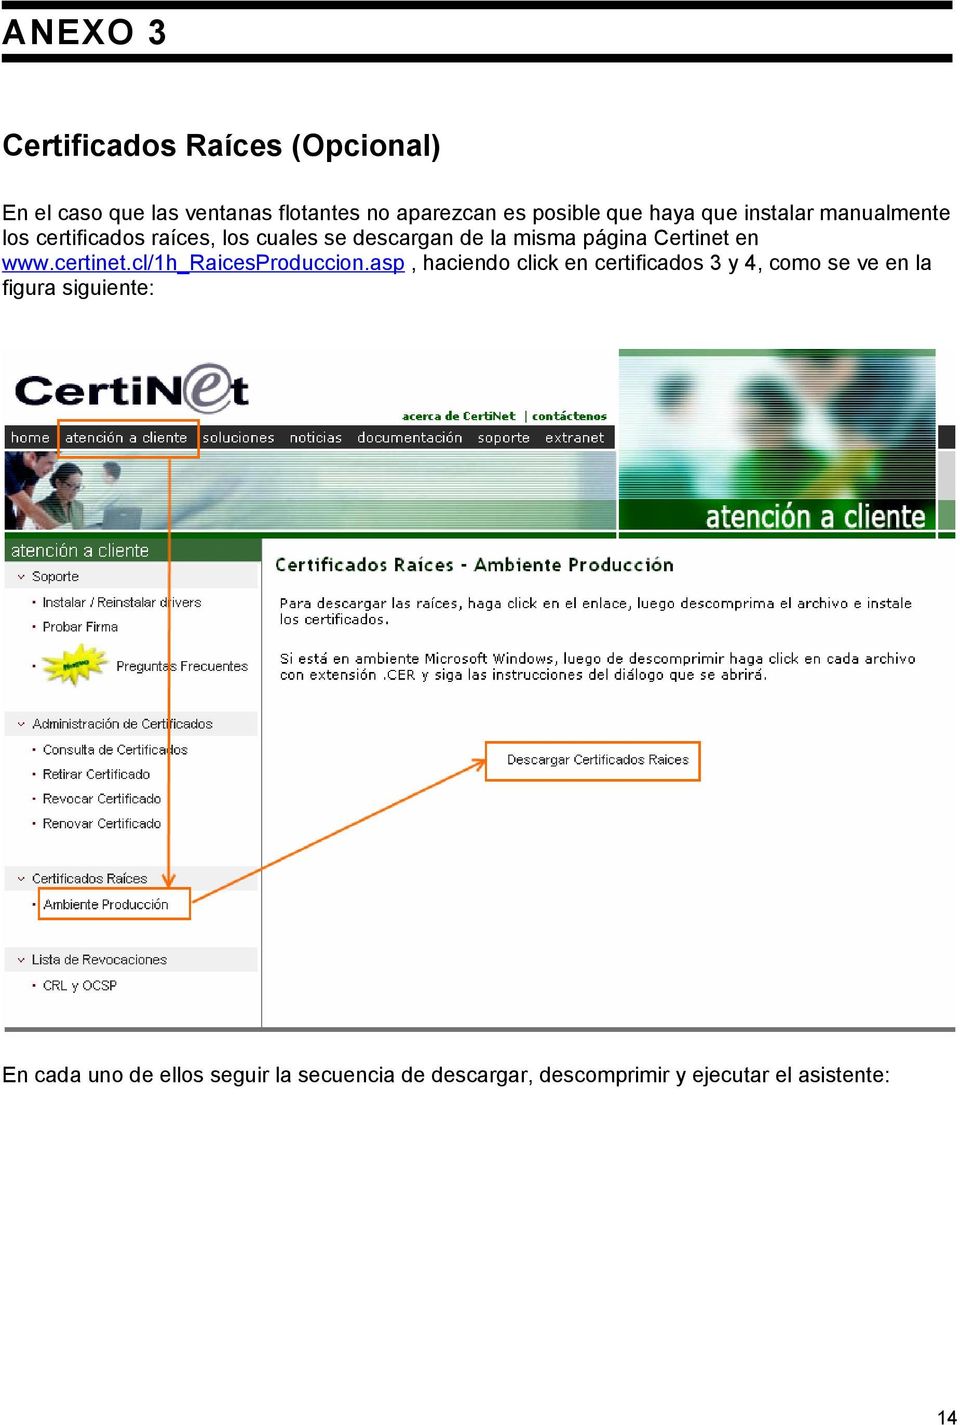 Certinet en www.certinet.cl/1h_raicesproduccion.